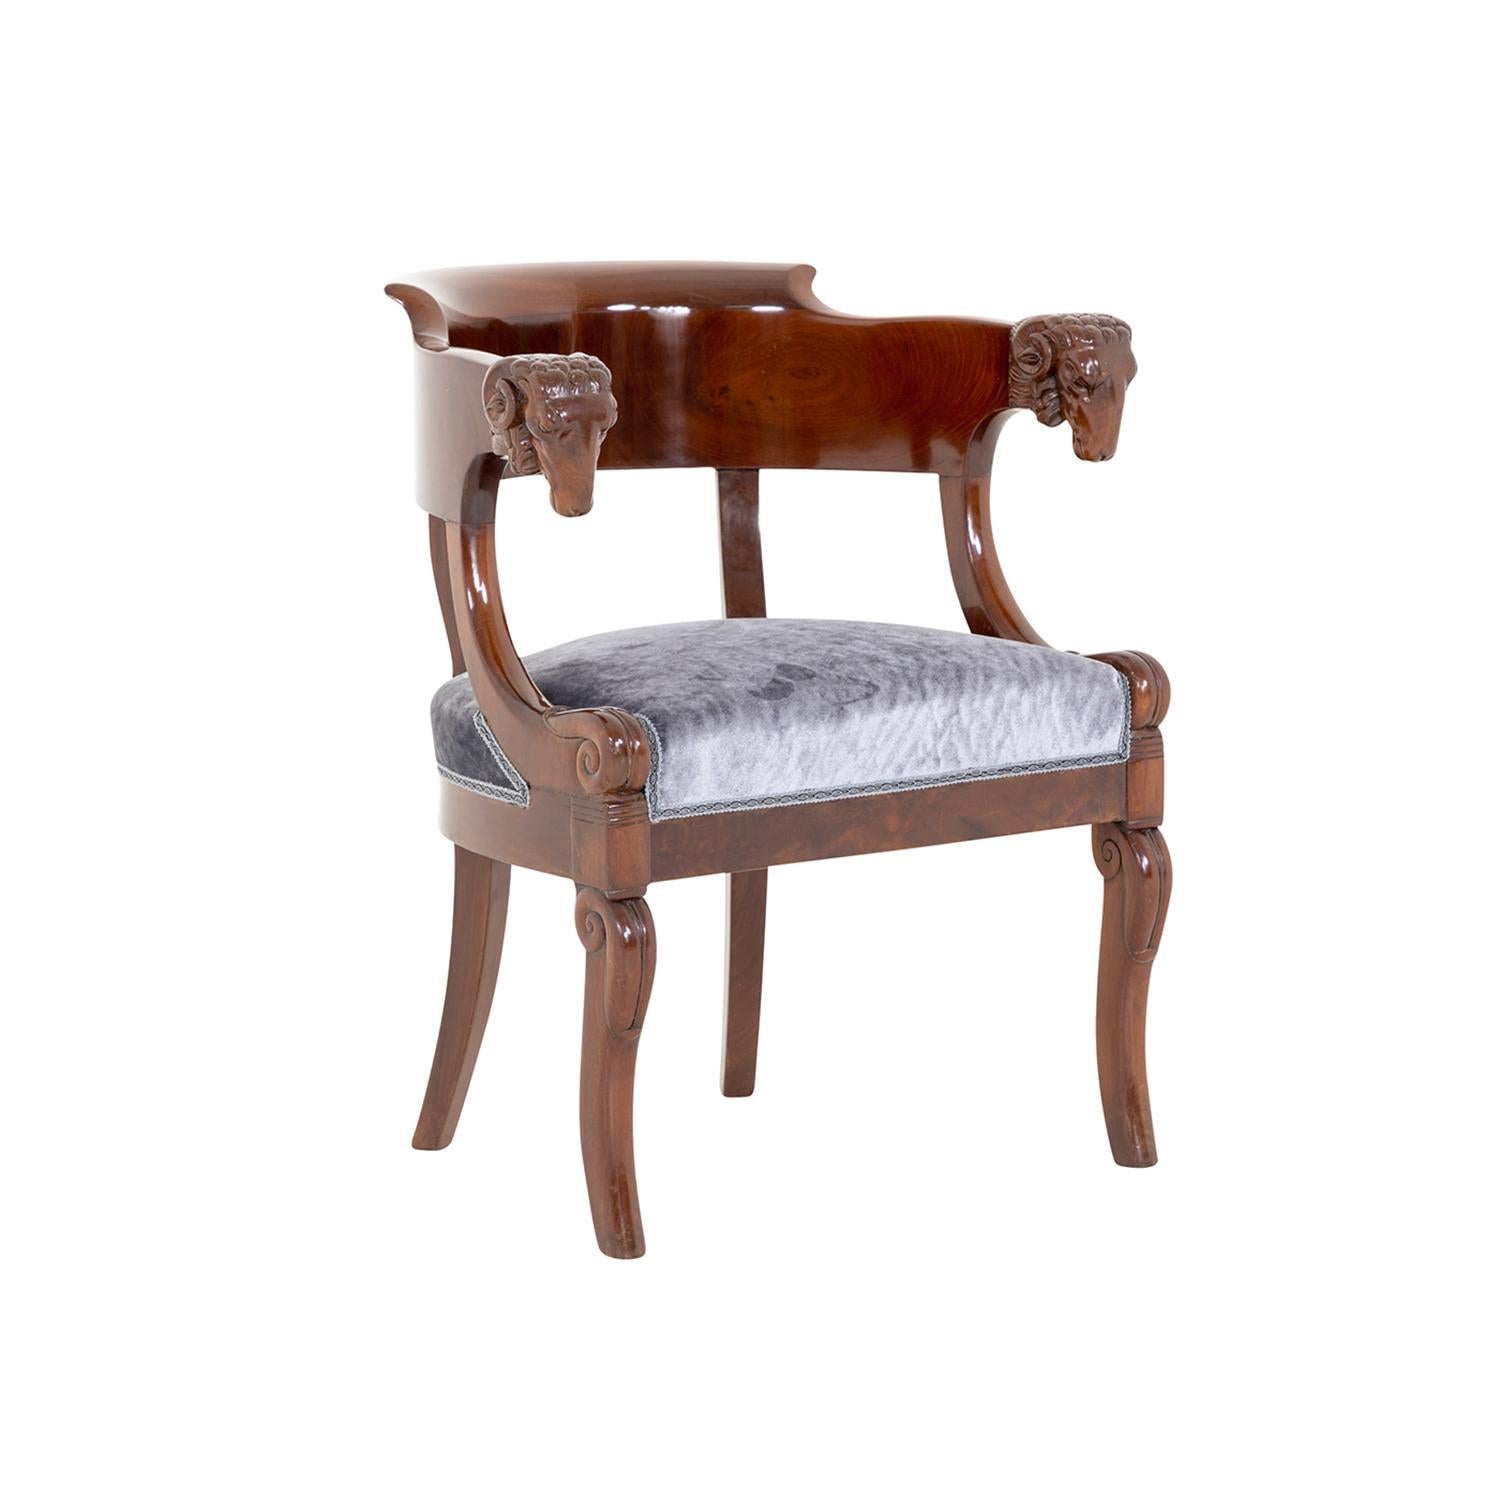 19th Century German Biedermeier Polished Mahogany Armchair - Antique Side Chair For Sale 2